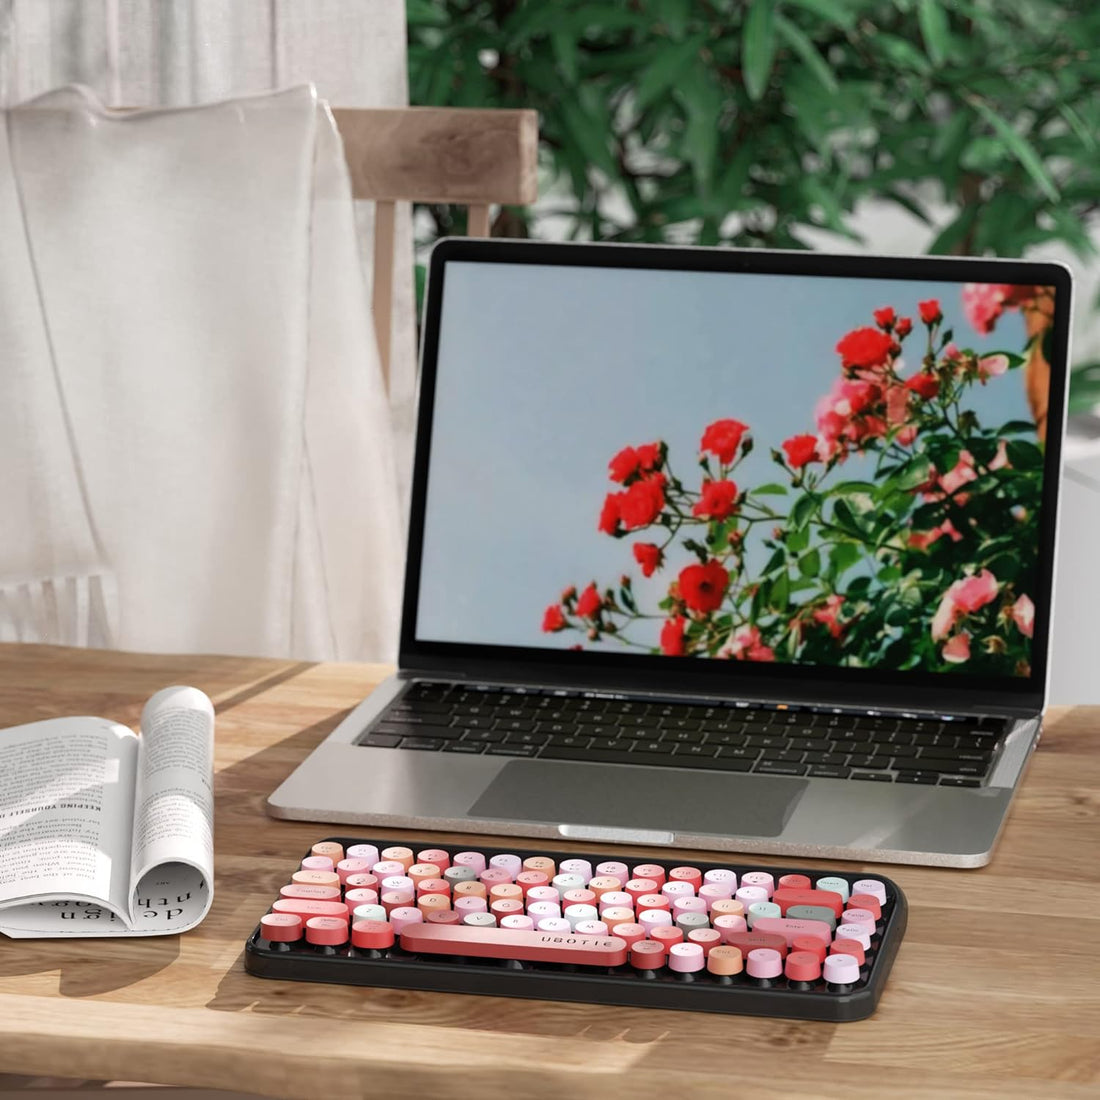 UBOTIE Portable Bluetooth Colorful Computer Keyboards, Wireless Mini Compact Retro Typewriter Flexible 84Keys Design Keyboard (Black-Colorful)